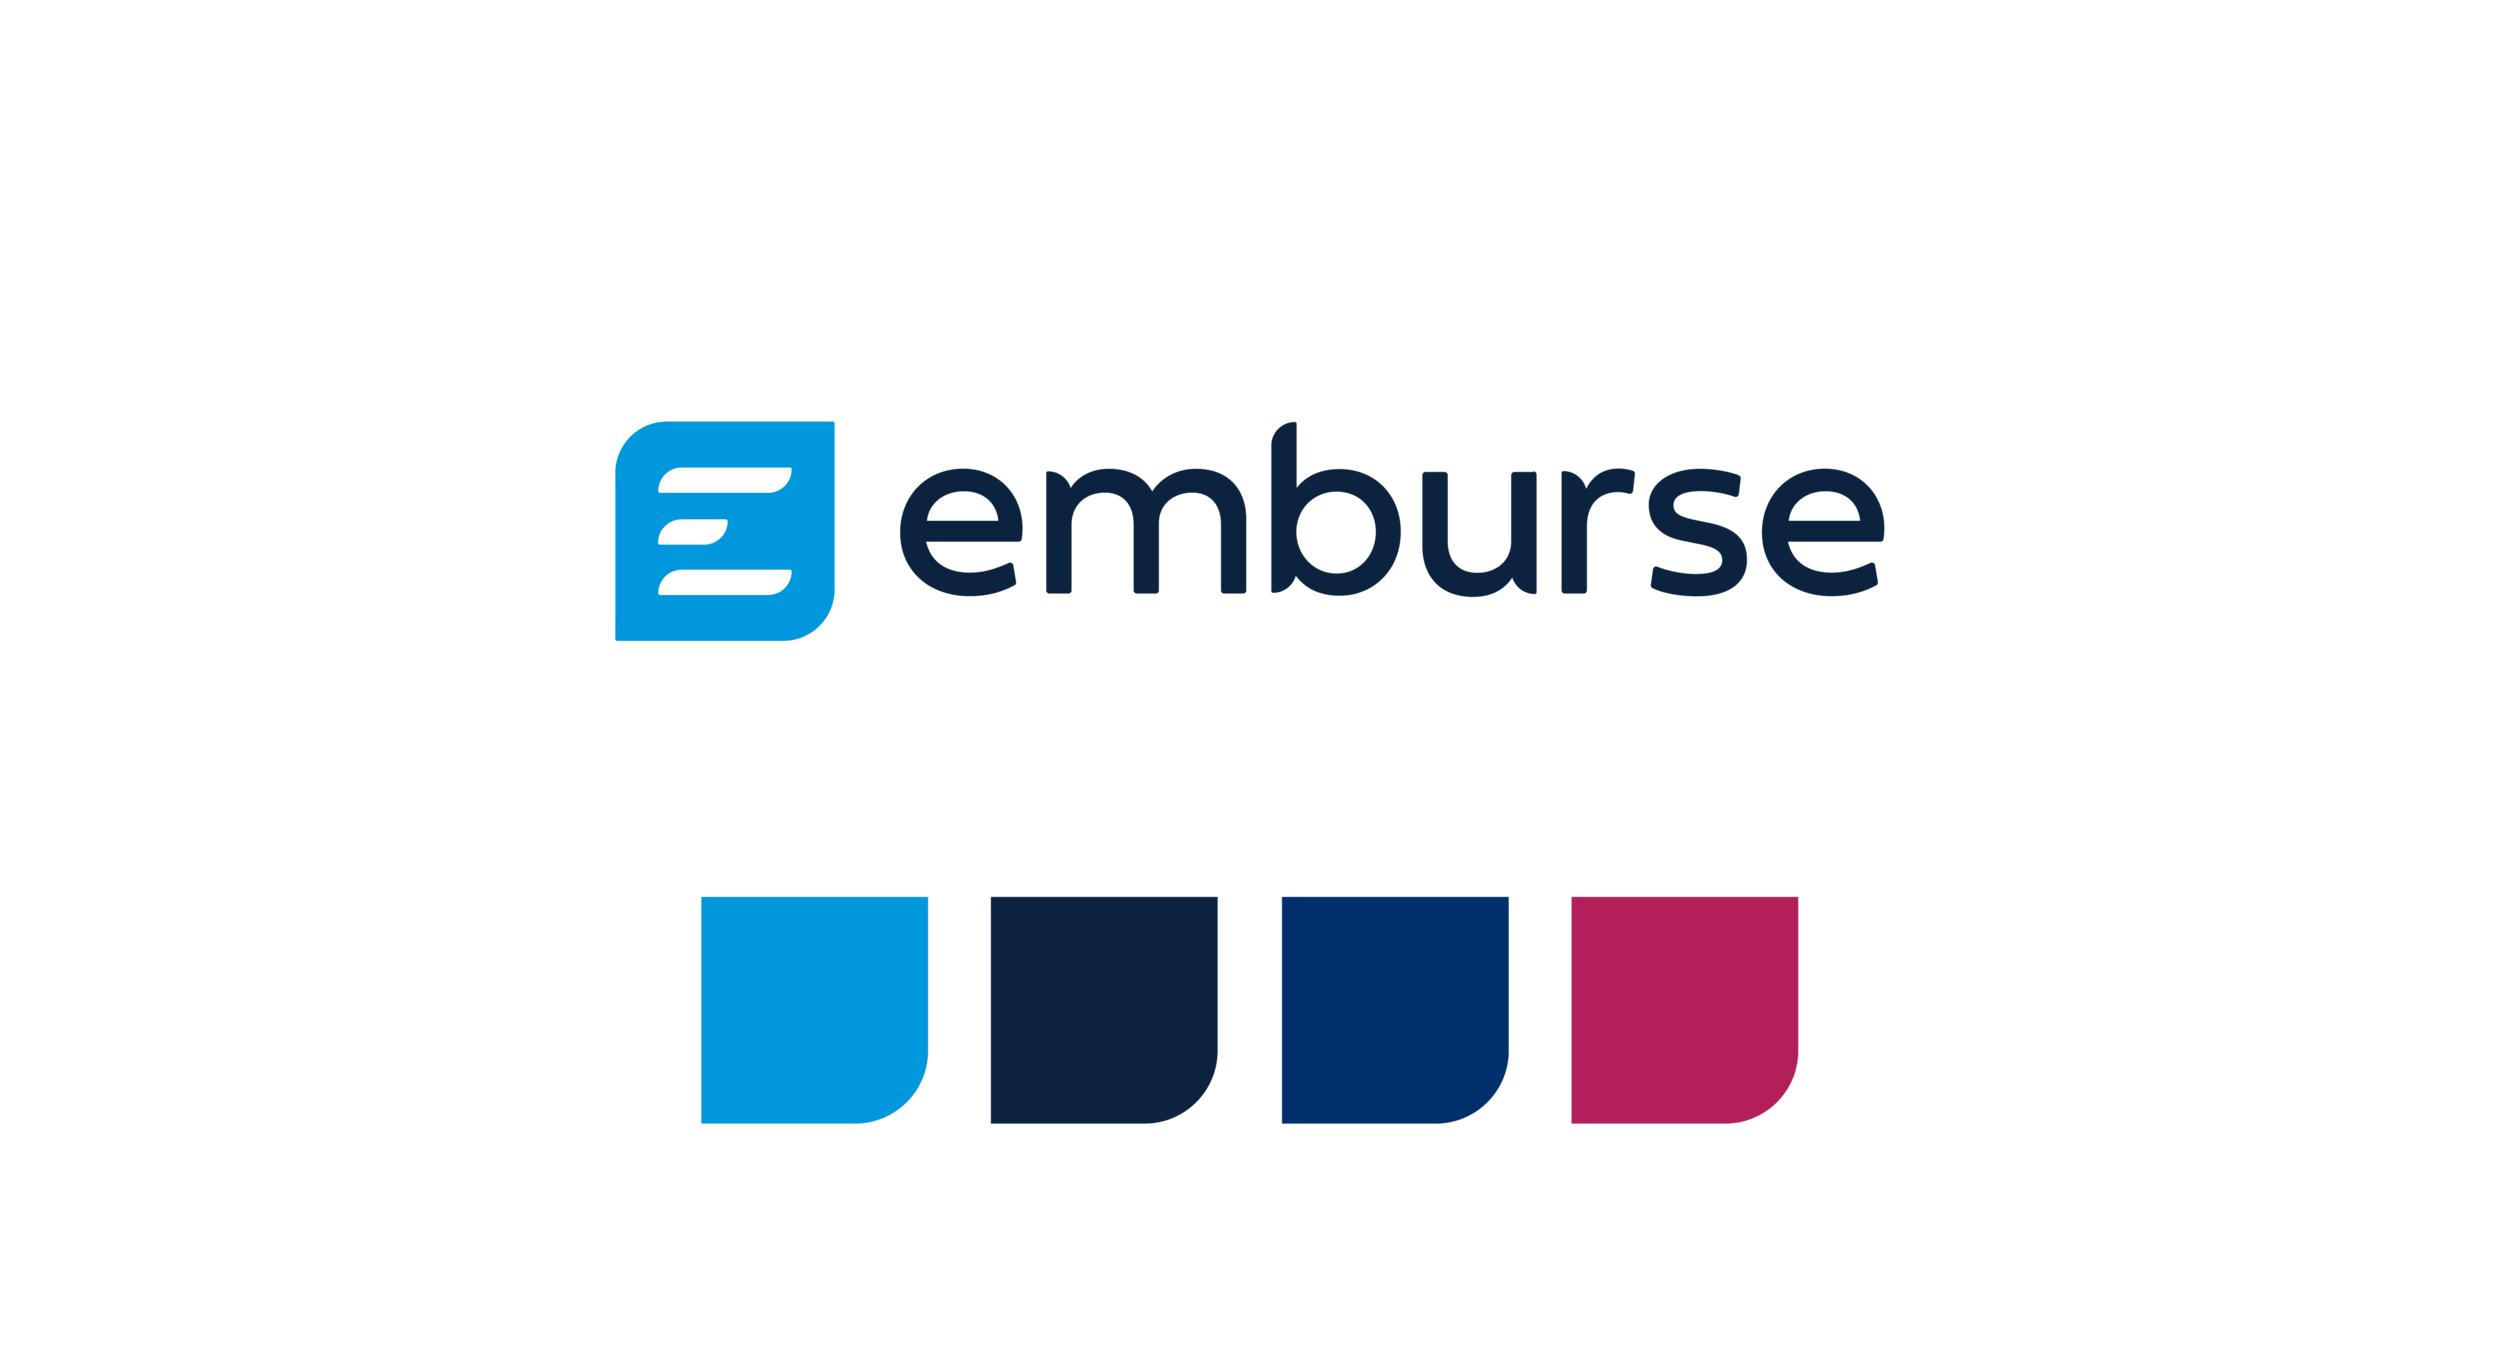 Emburse-Brand-Dev-Colors-12.png